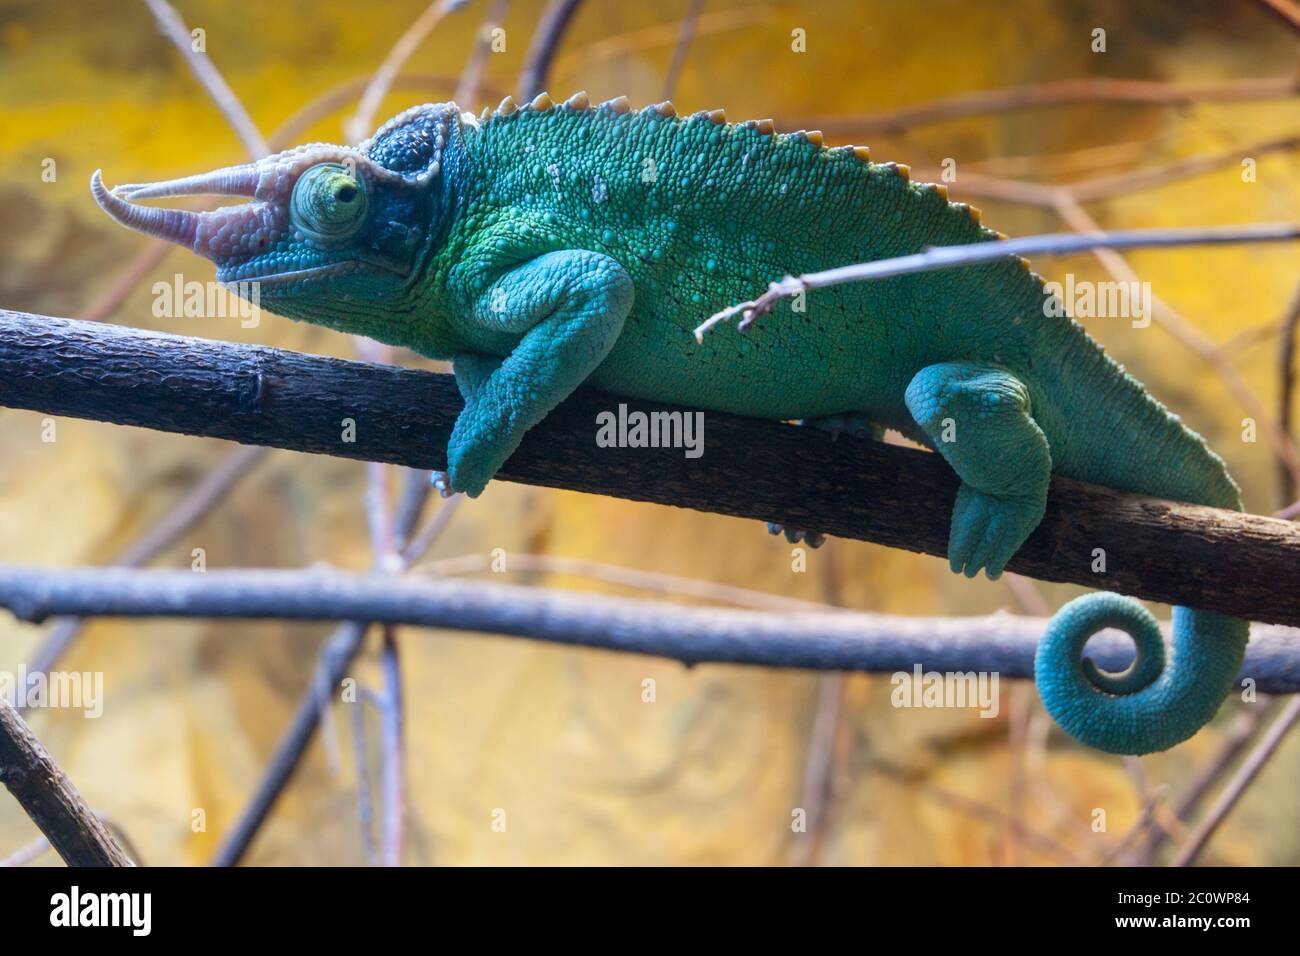 Green-blue chameleon sitting on the branch in terrarium Stock Photo - Alamy